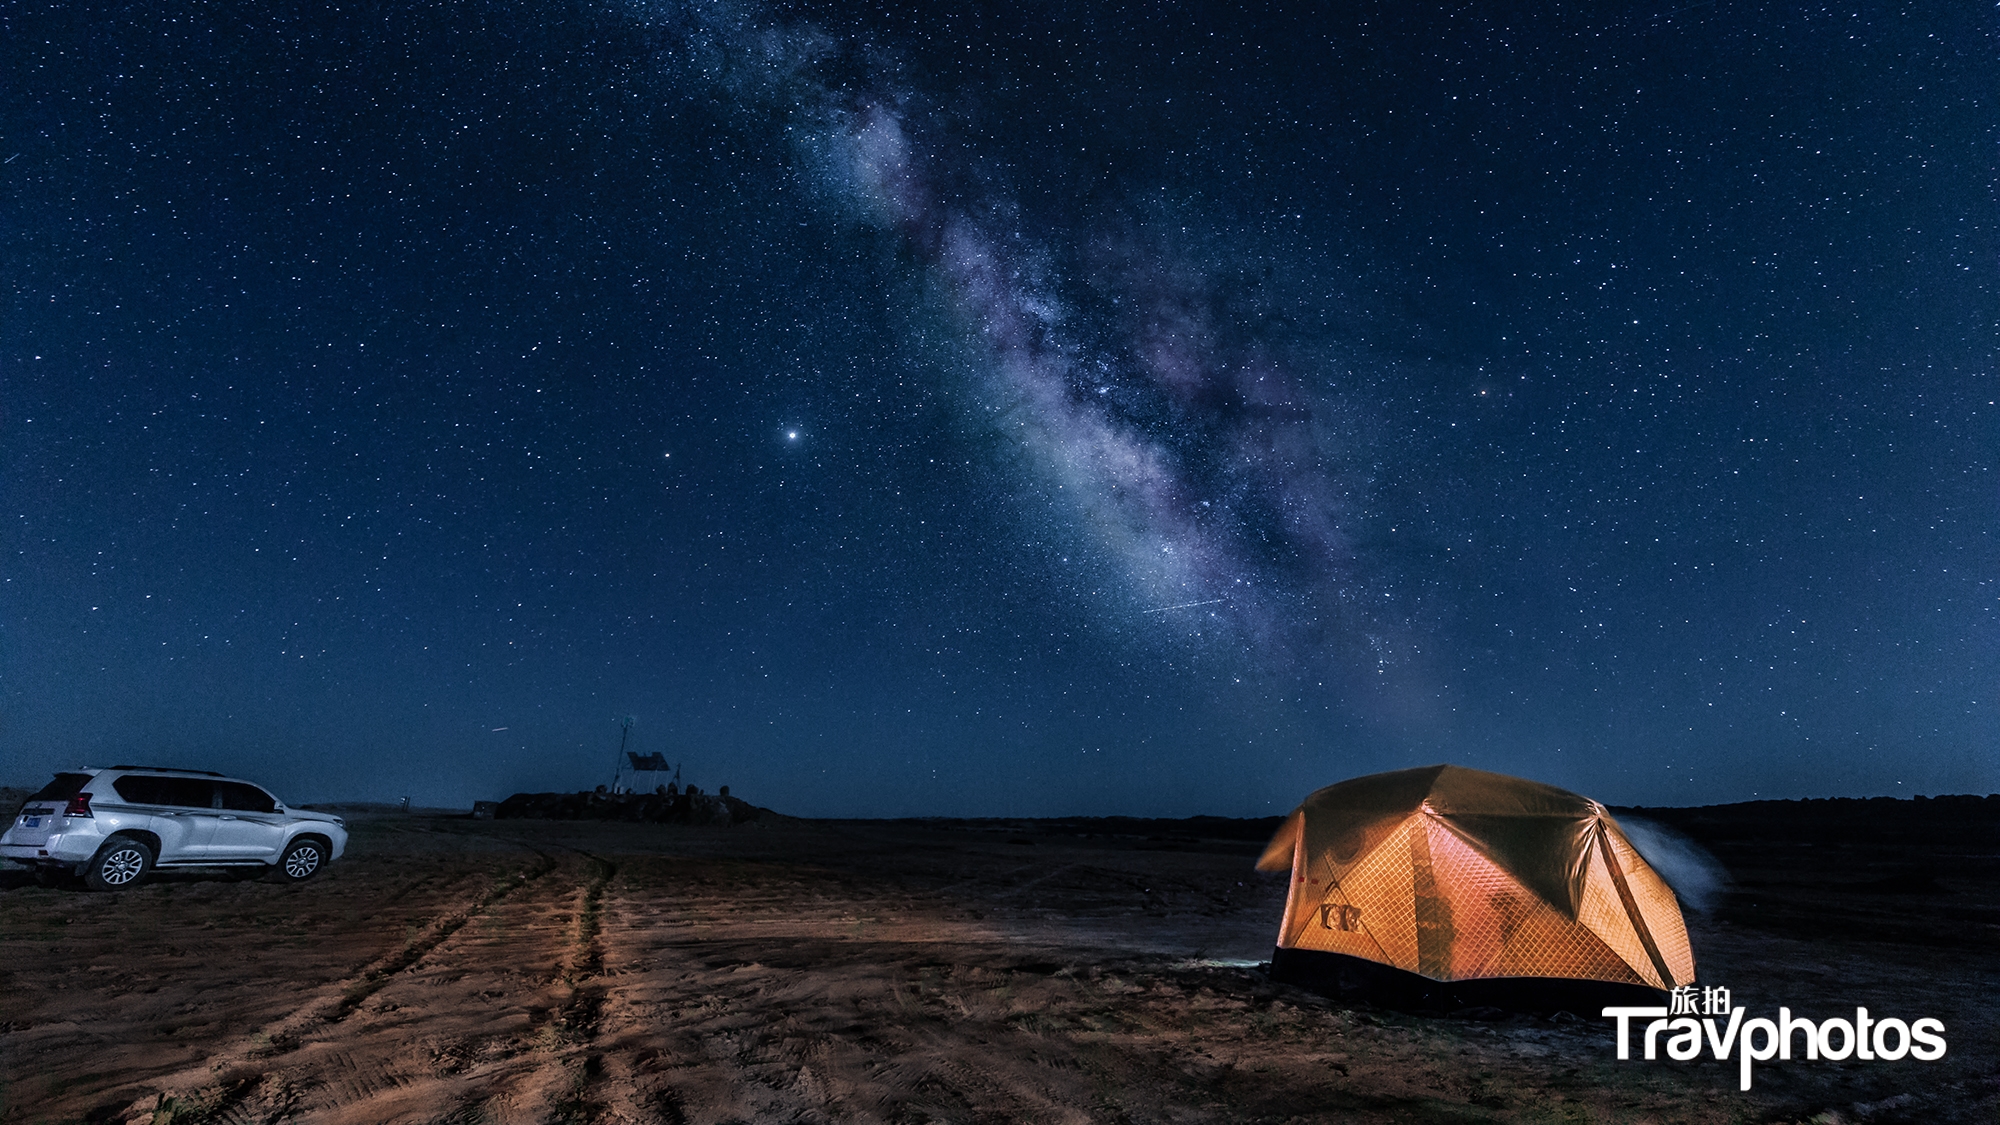 hk_c_《璀璨銀河》+王曉莉+2020年7月，青海俄博梁，夜晚我們驅車到渺無人煙的俄博梁雅丹區，計劃以俄博梁雅丹為前景拍攝星空銀河，11點多鍾，沙漠起了風，領隊考慮大家的安全，決定放棄沙漠中的拍攝，無奈回到居住的火星基地。以室外帳篷和汽車為前景，拍了這張壯美的星空銀河。.jpg